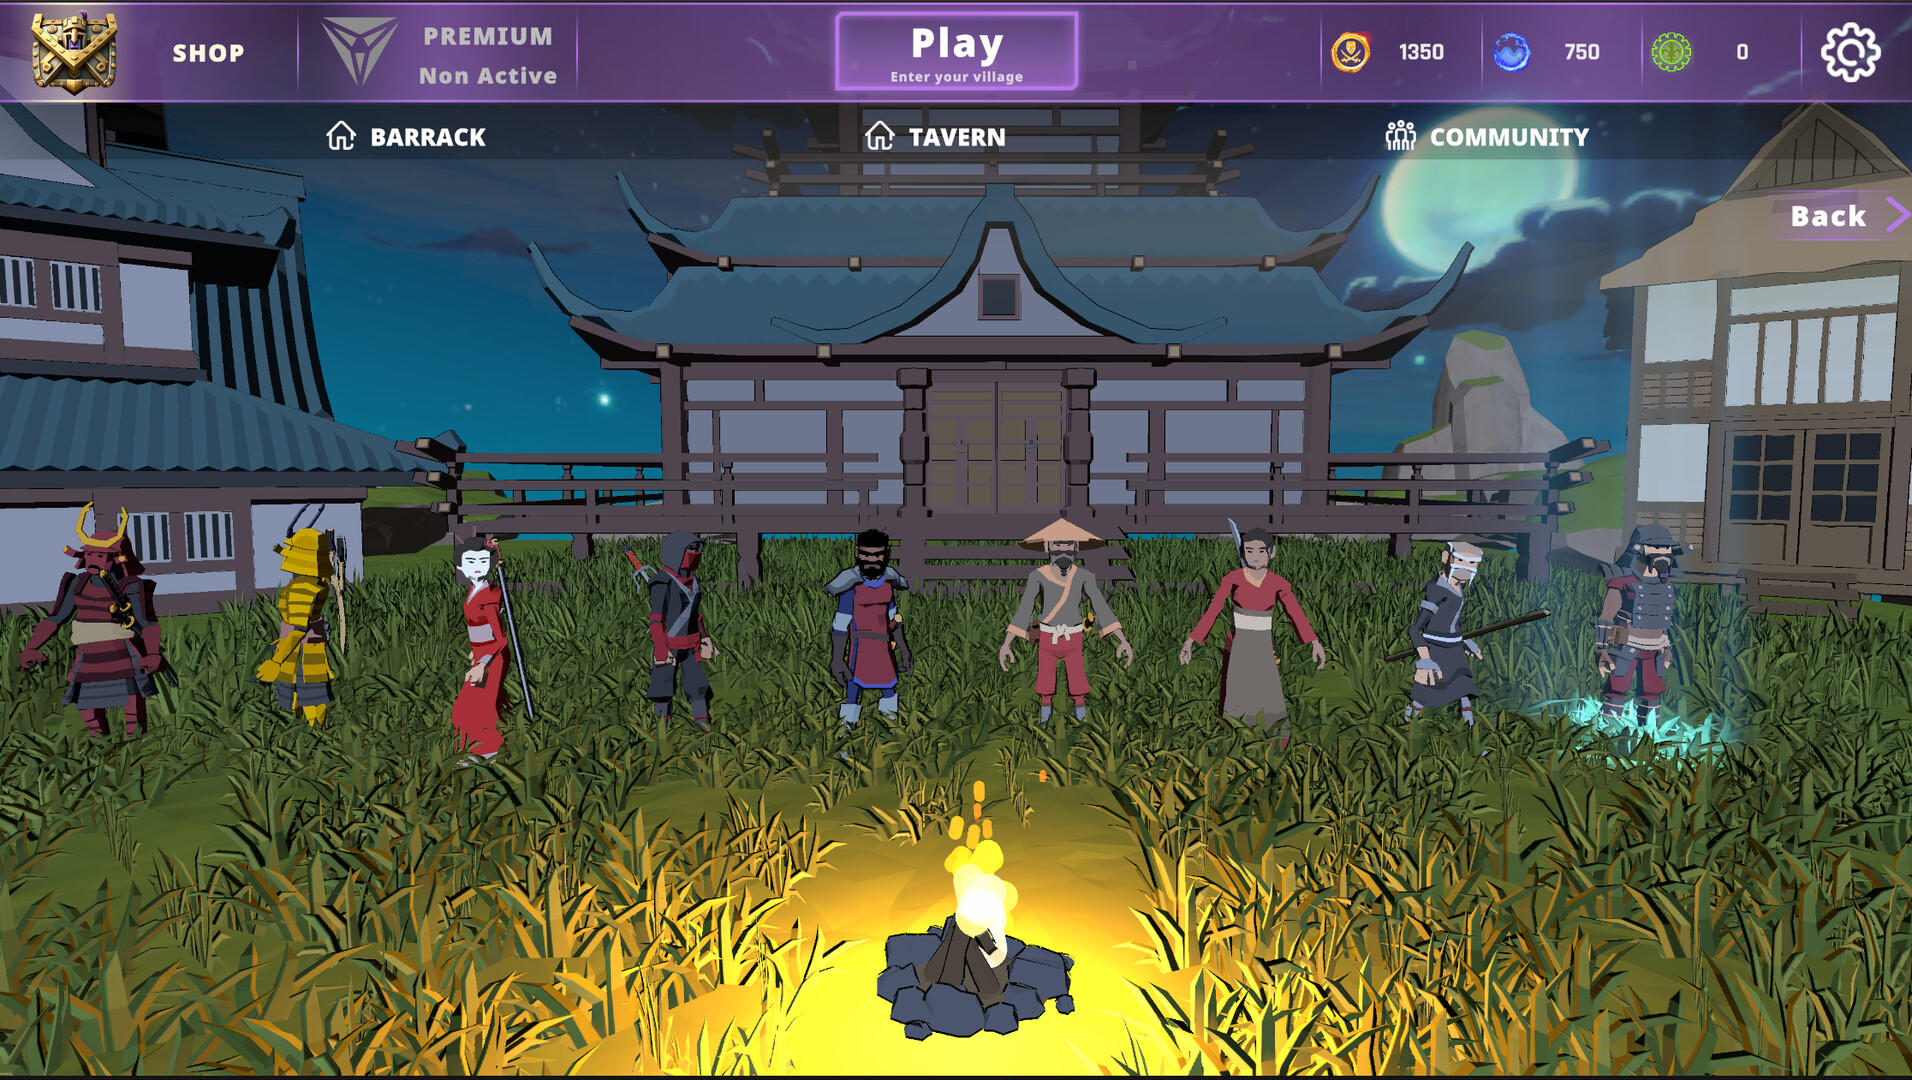 Ninja screenshot game